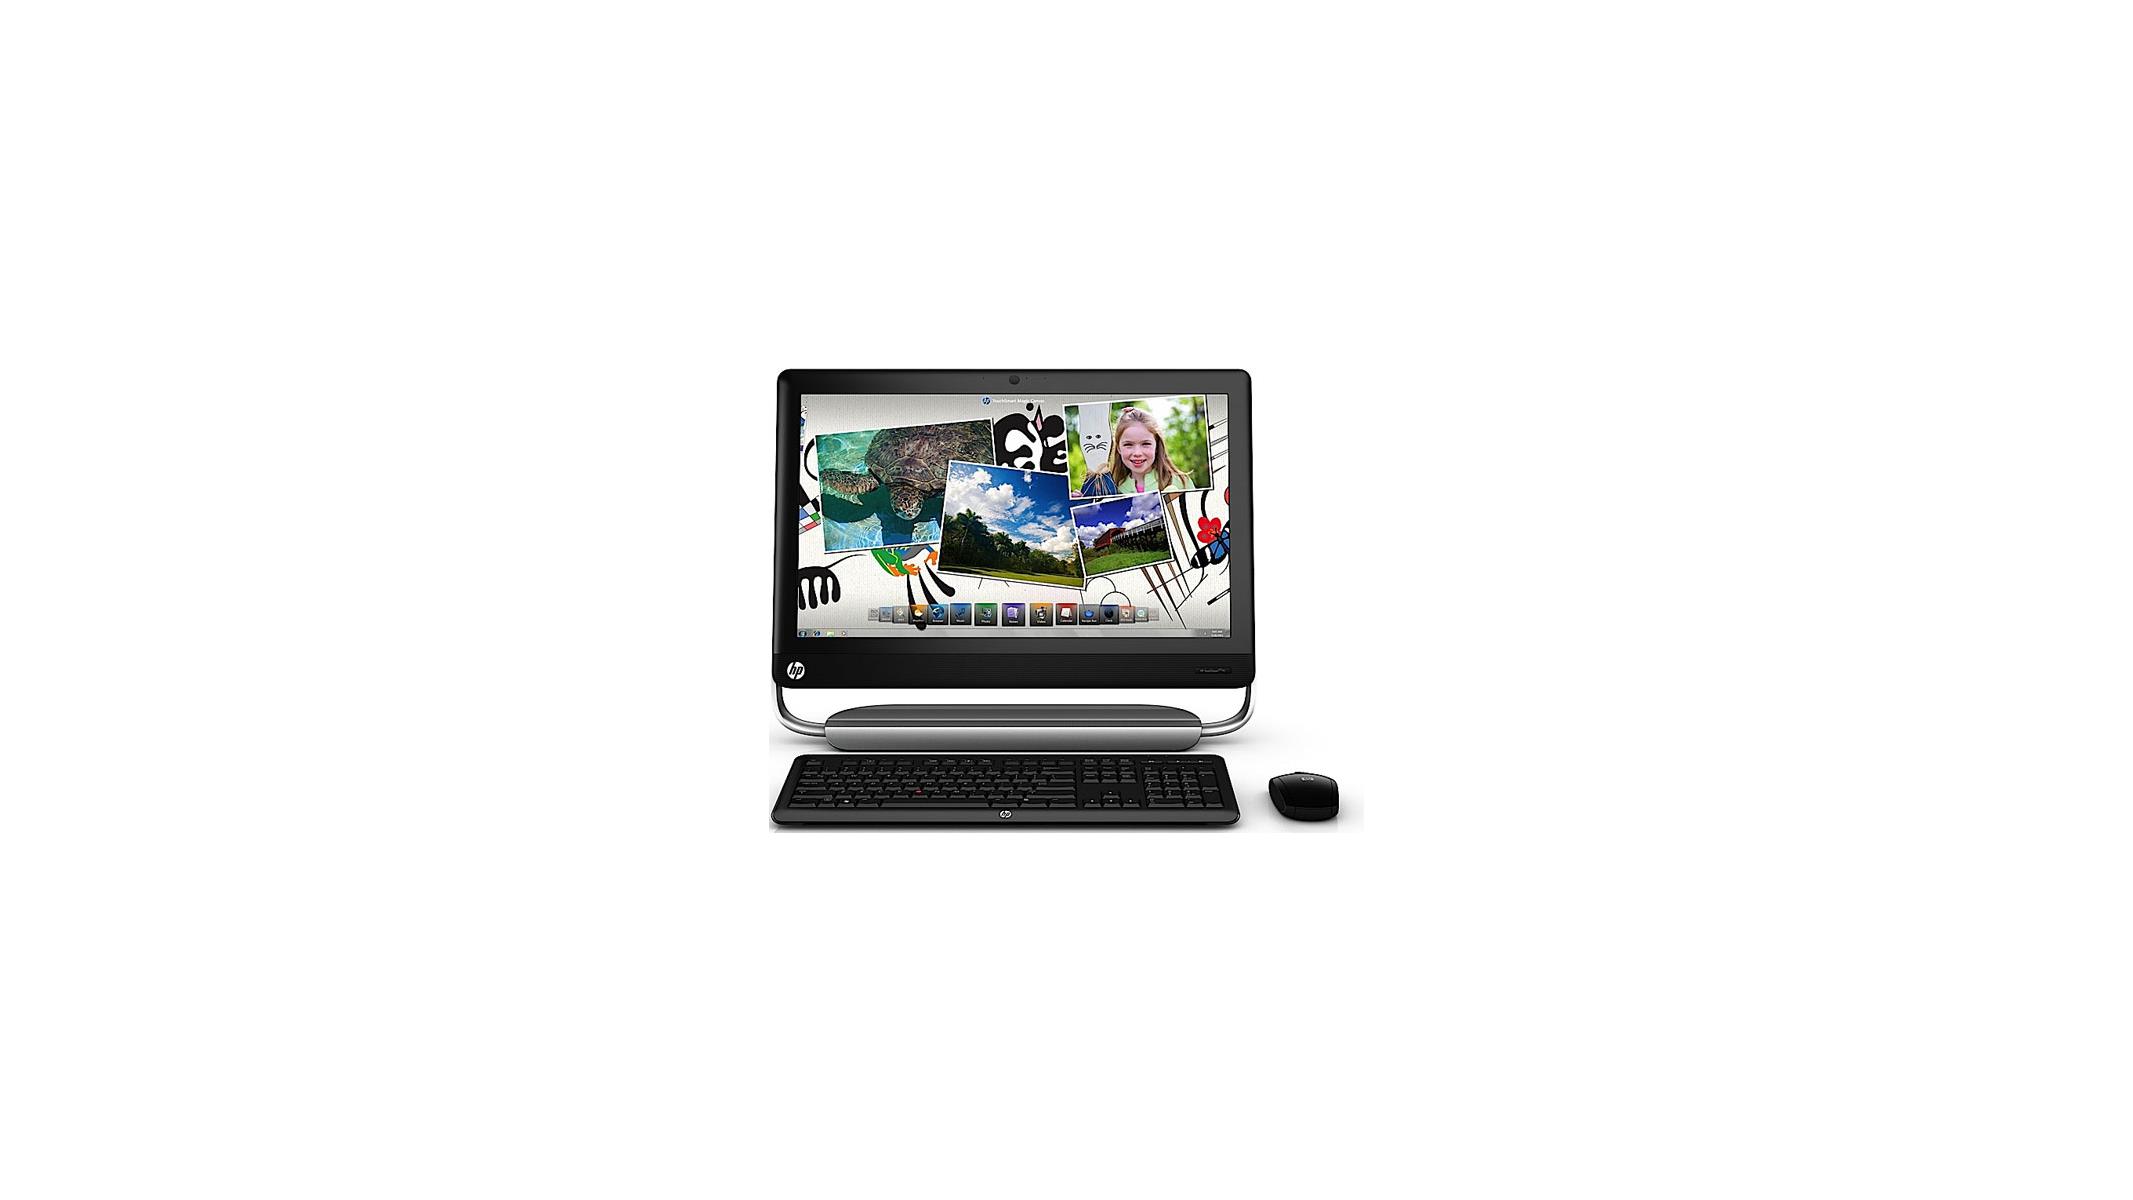 TouchSmart 520-1200 Desktop PC series